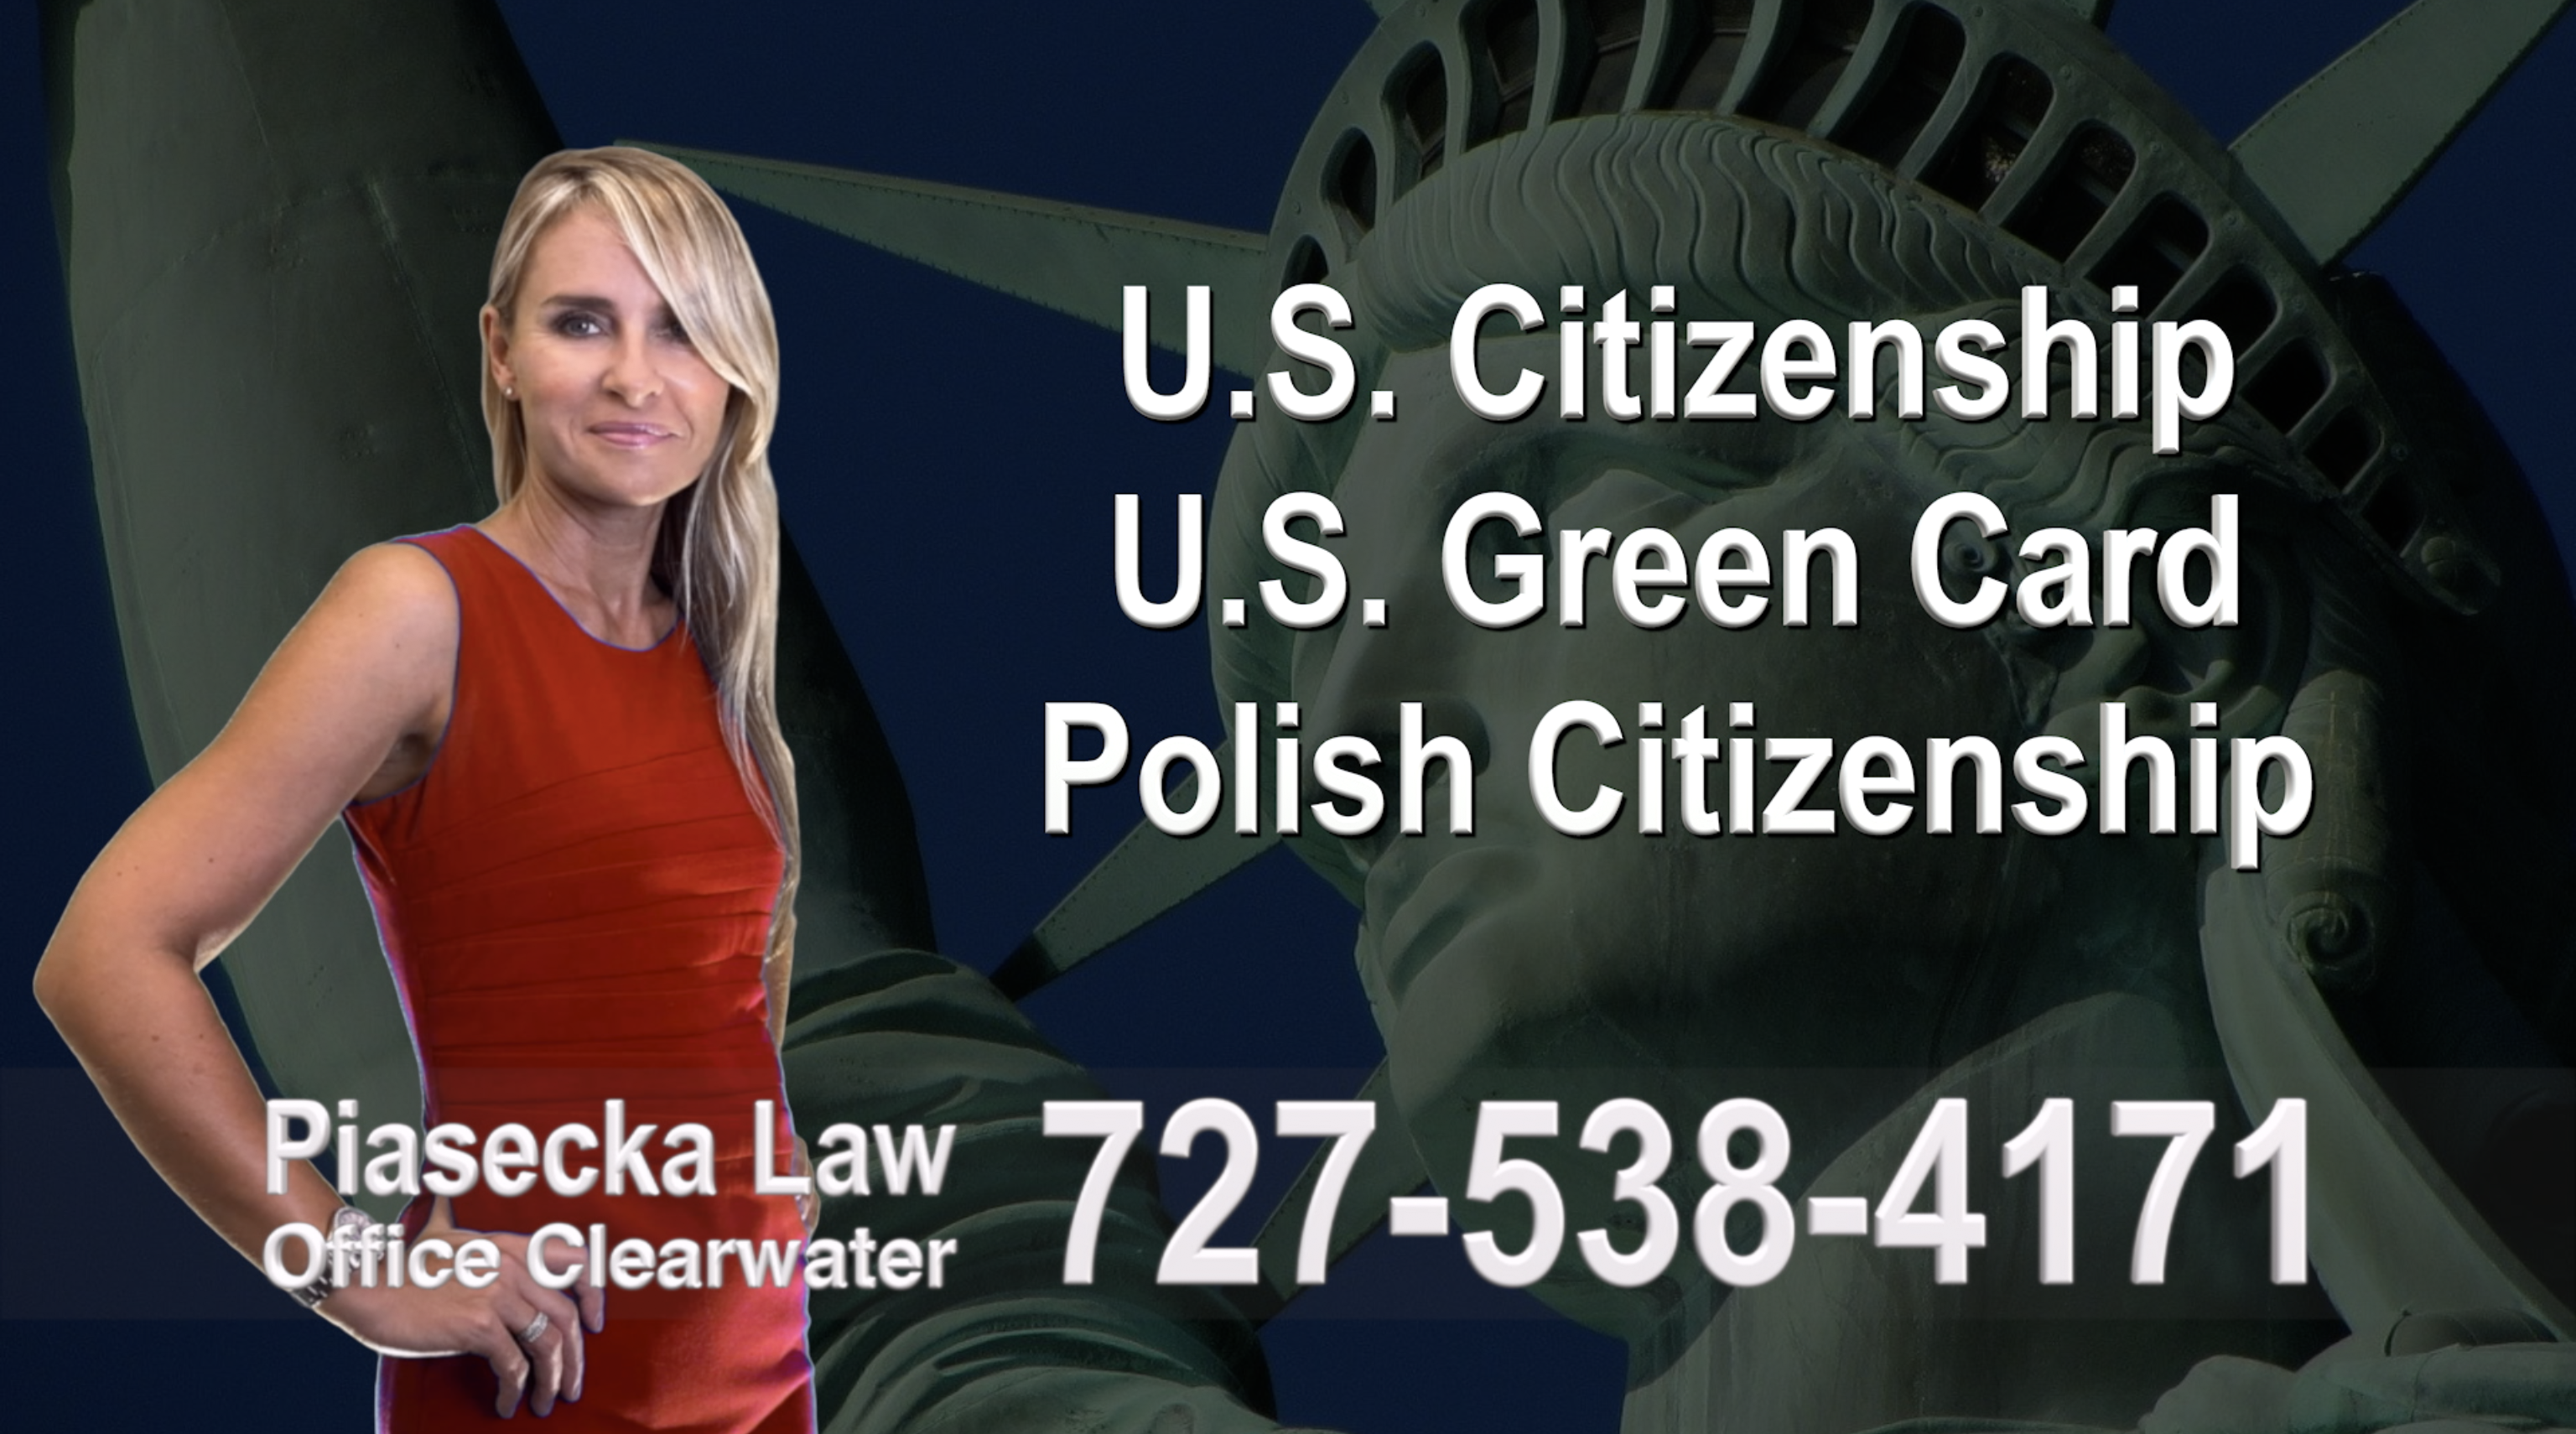 Clearwater U.S. Citizenship, U.S. Green Card, Polish Citizenship, Attorney, Lawyer, Agnieszka Piasecka, Aga Piasecka, Piasecka, Florida, US, USA